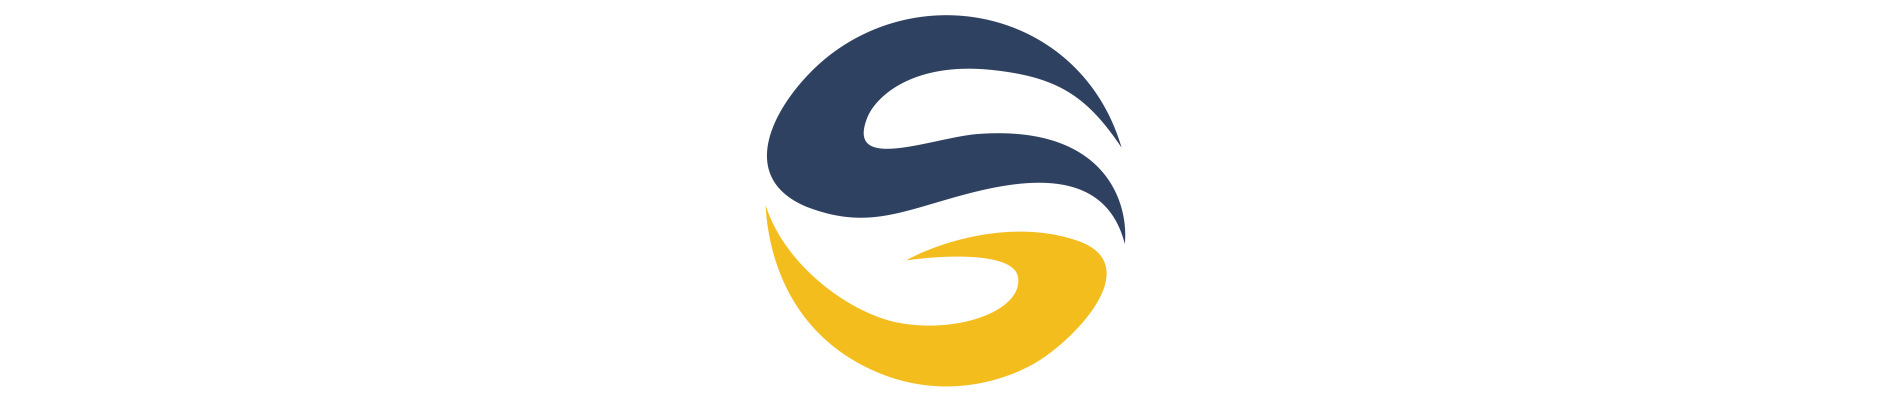 Guide Services Logo